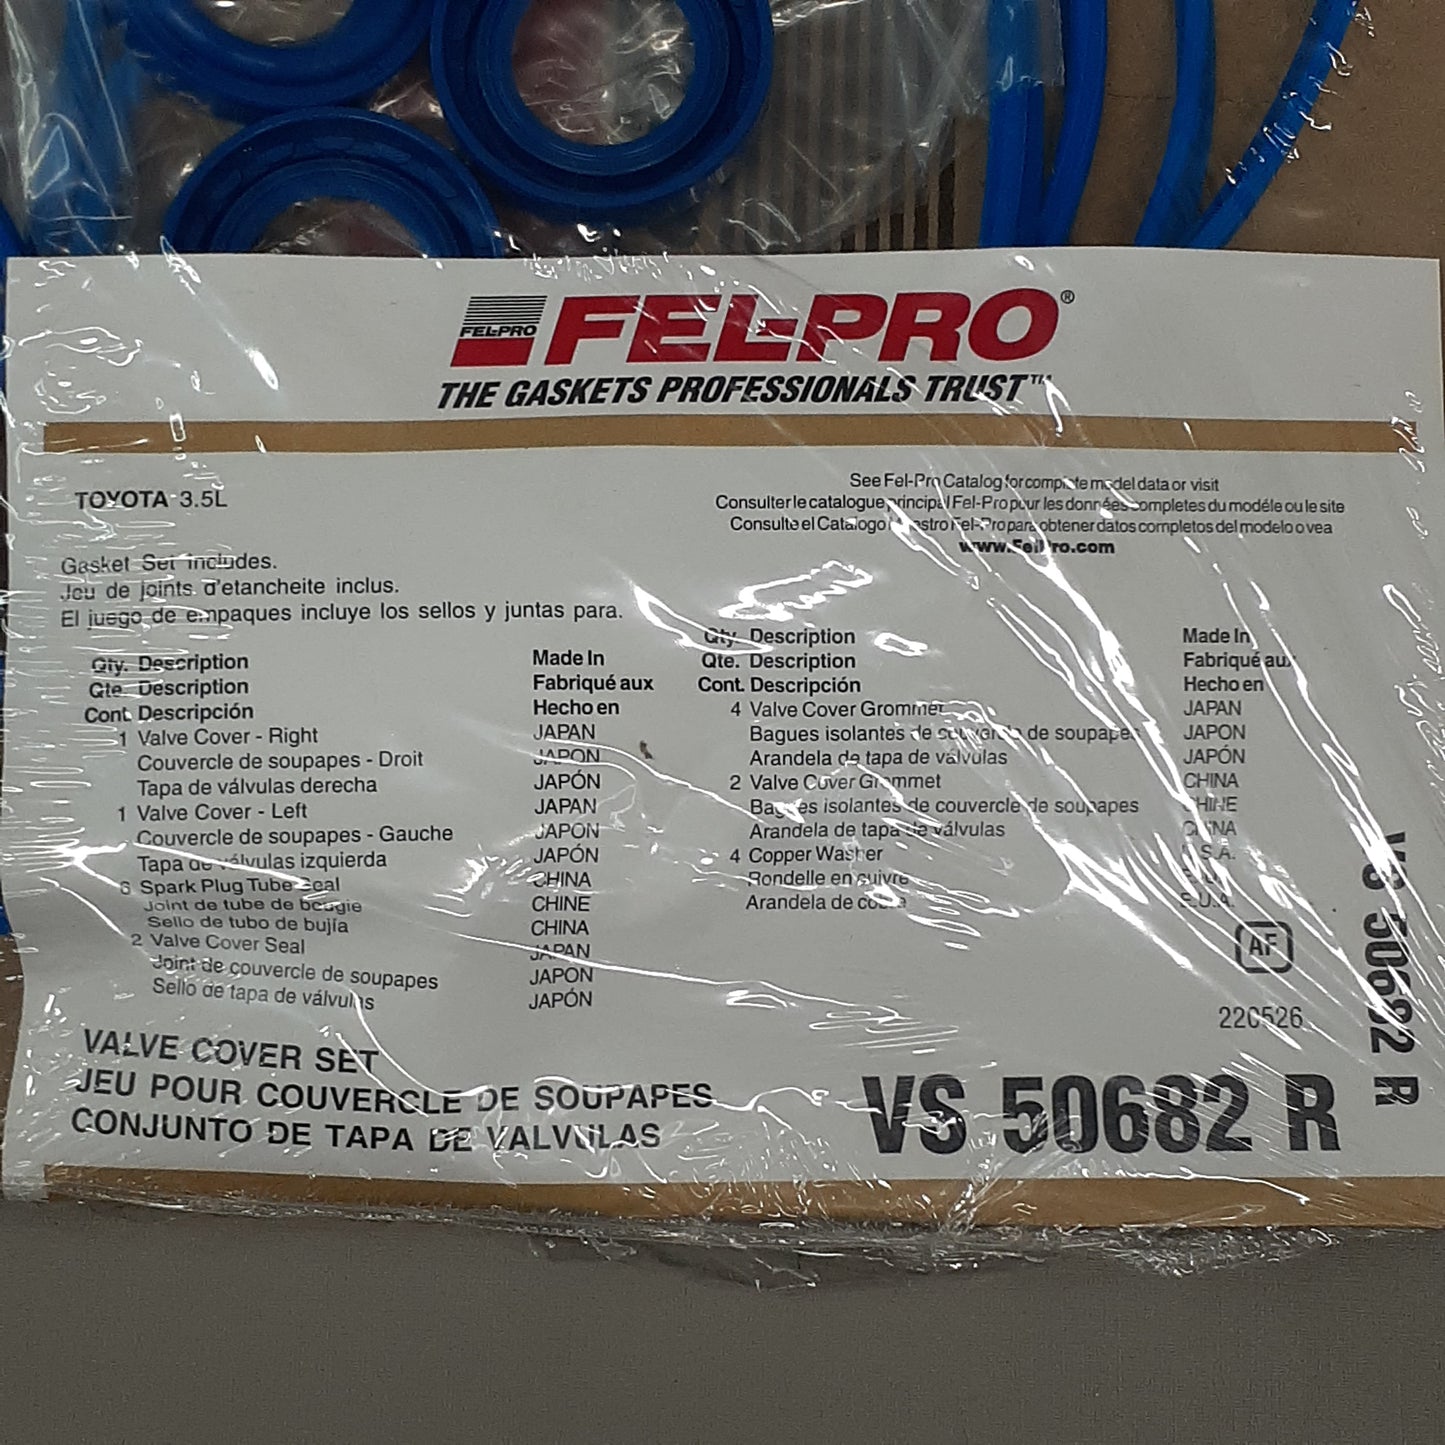 FEL-PRO Valve Cover Gasket Set VS 50682 R (New)